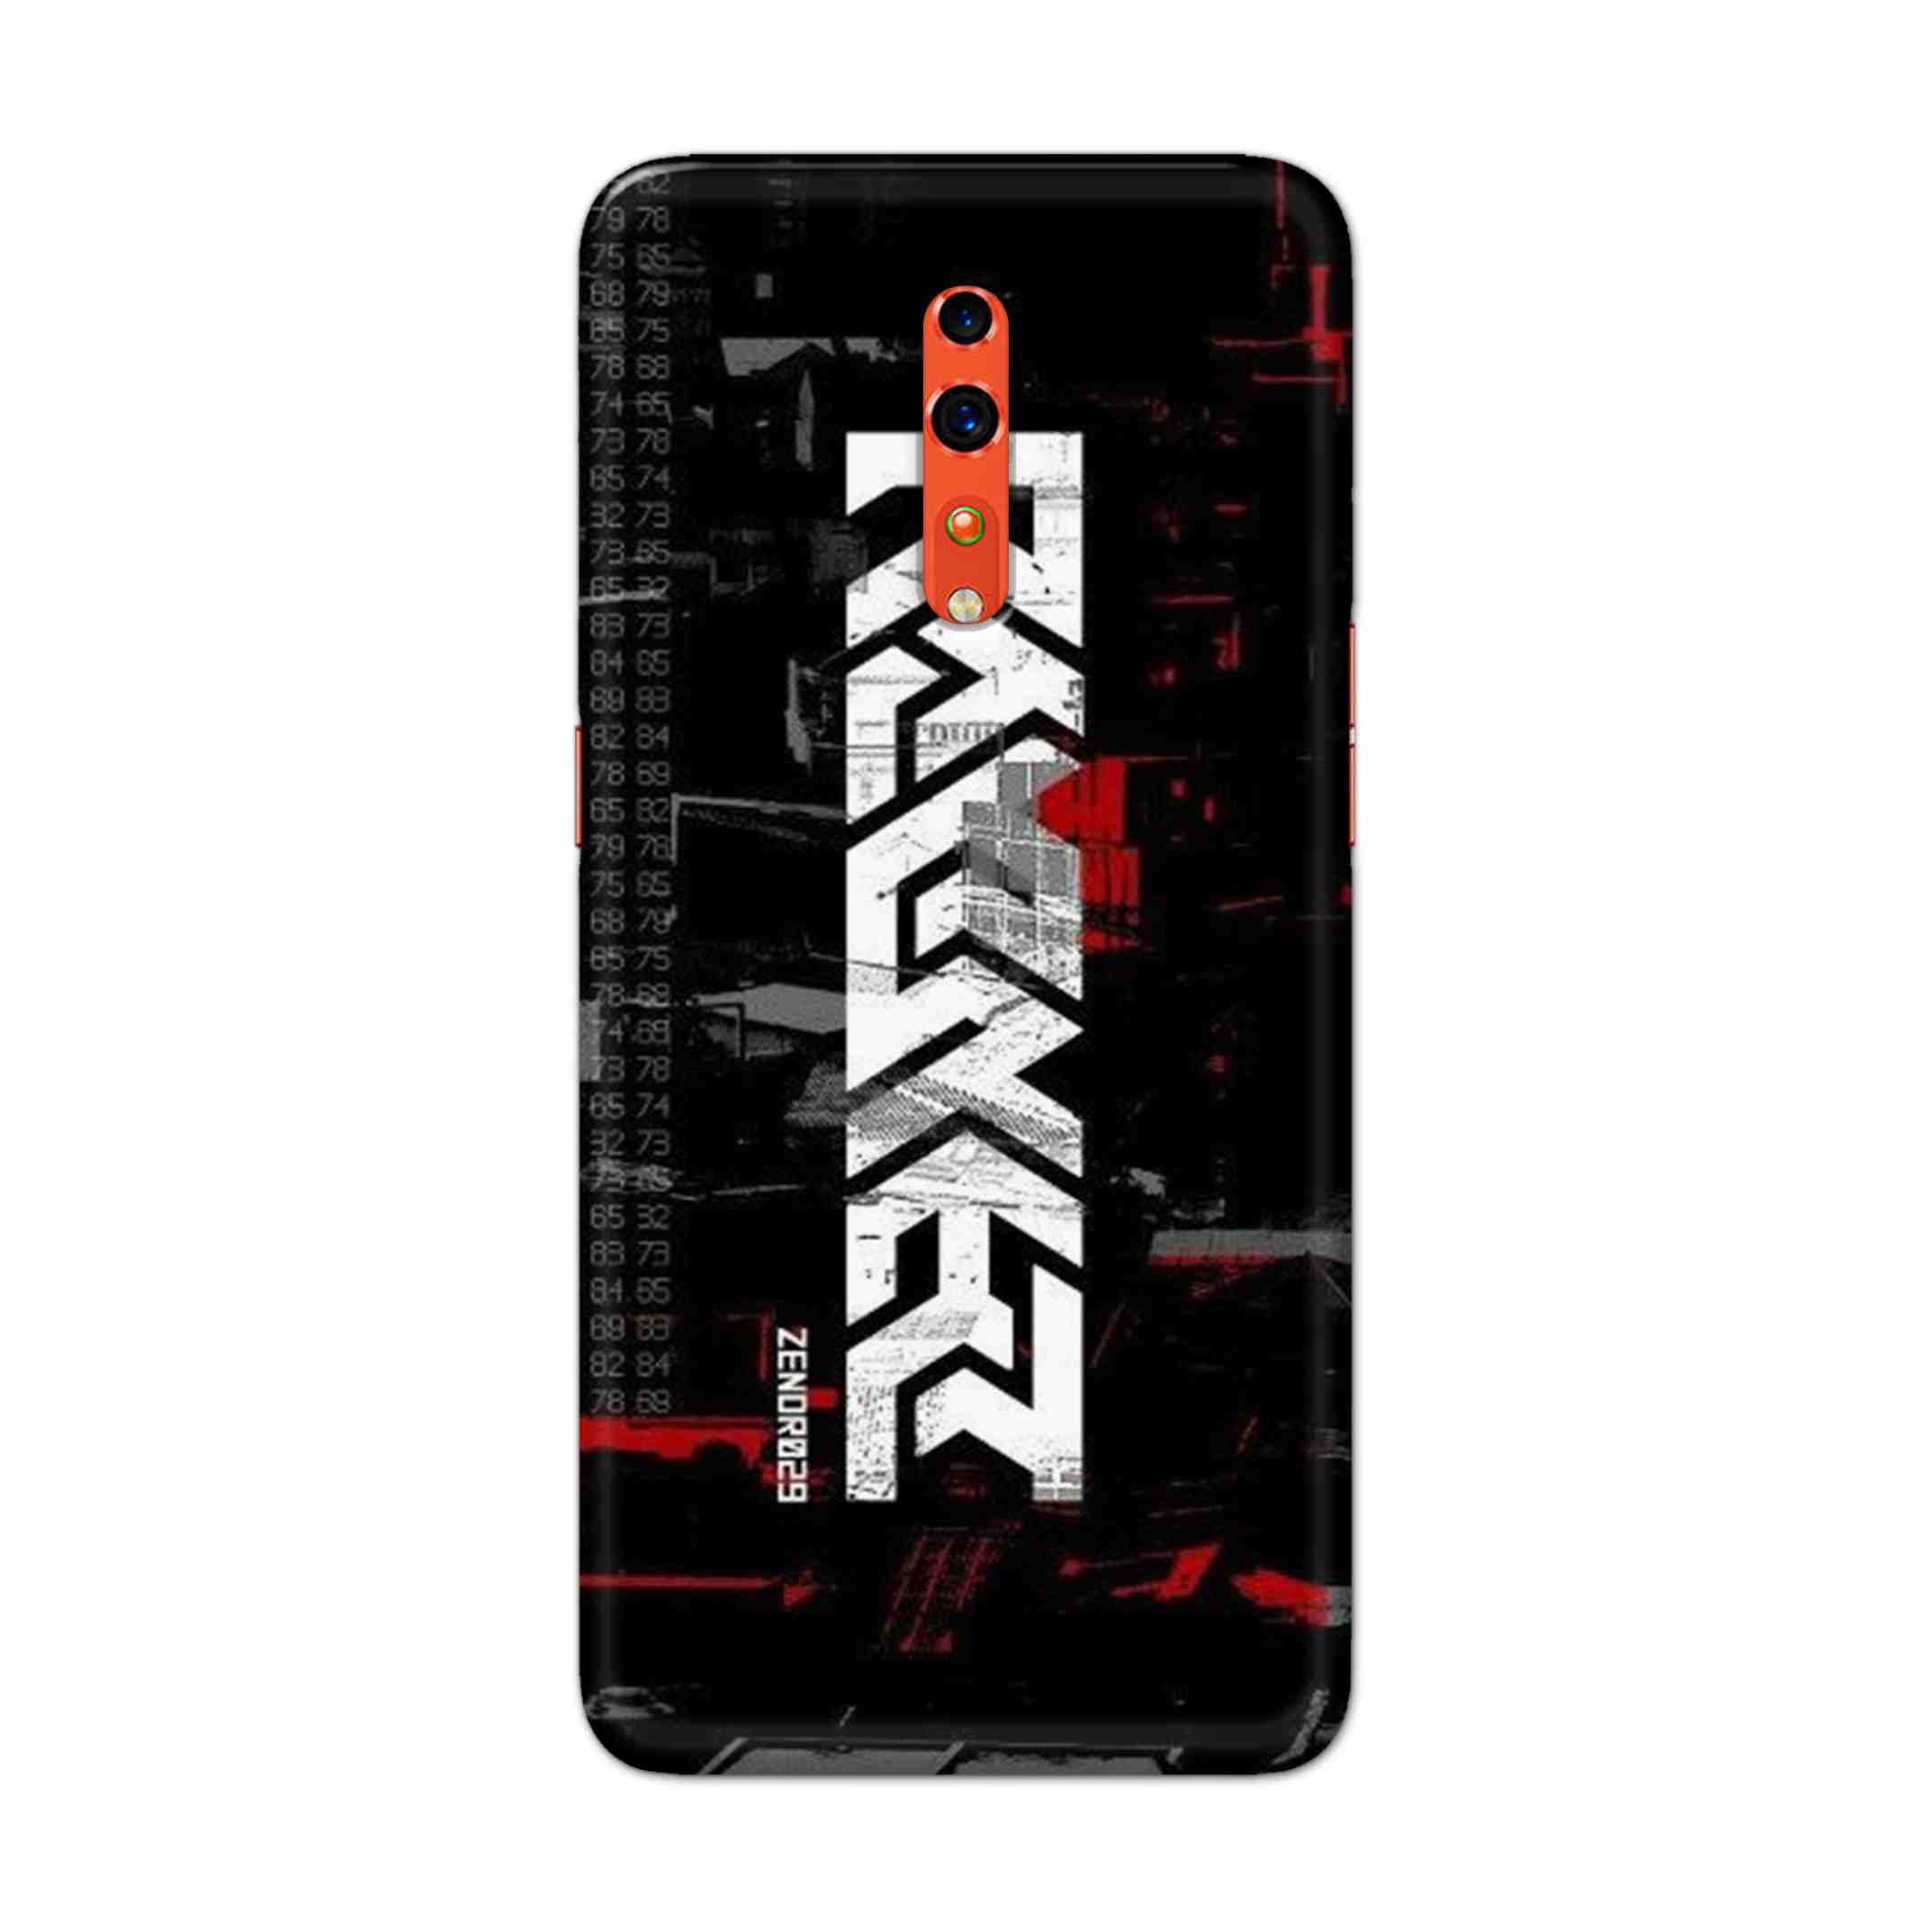 Buy Raxer Hard Back Mobile Phone Case Cover For OPPO Reno Z Online